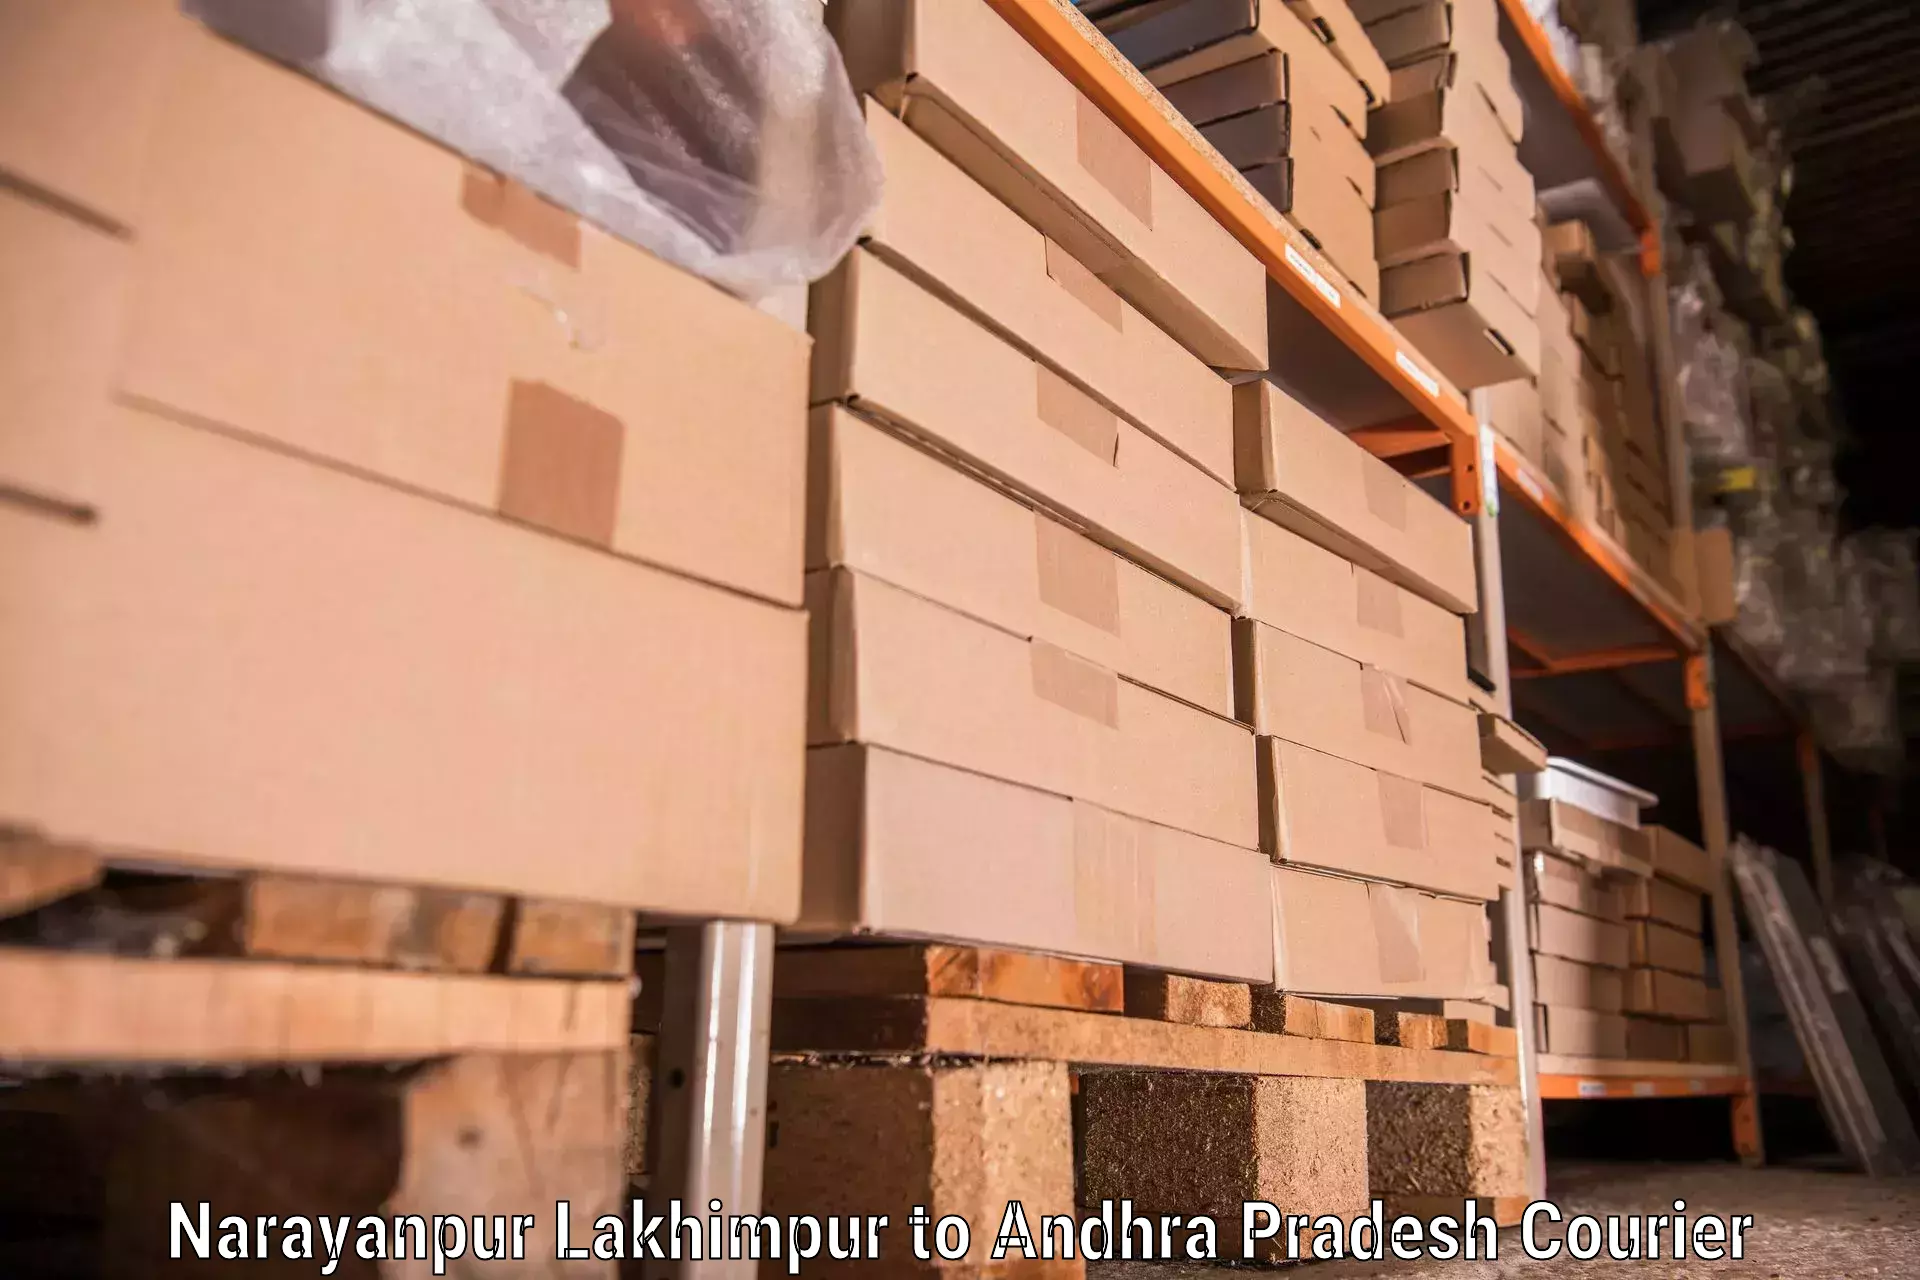 Home moving specialists Narayanpur Lakhimpur to Yerravaram